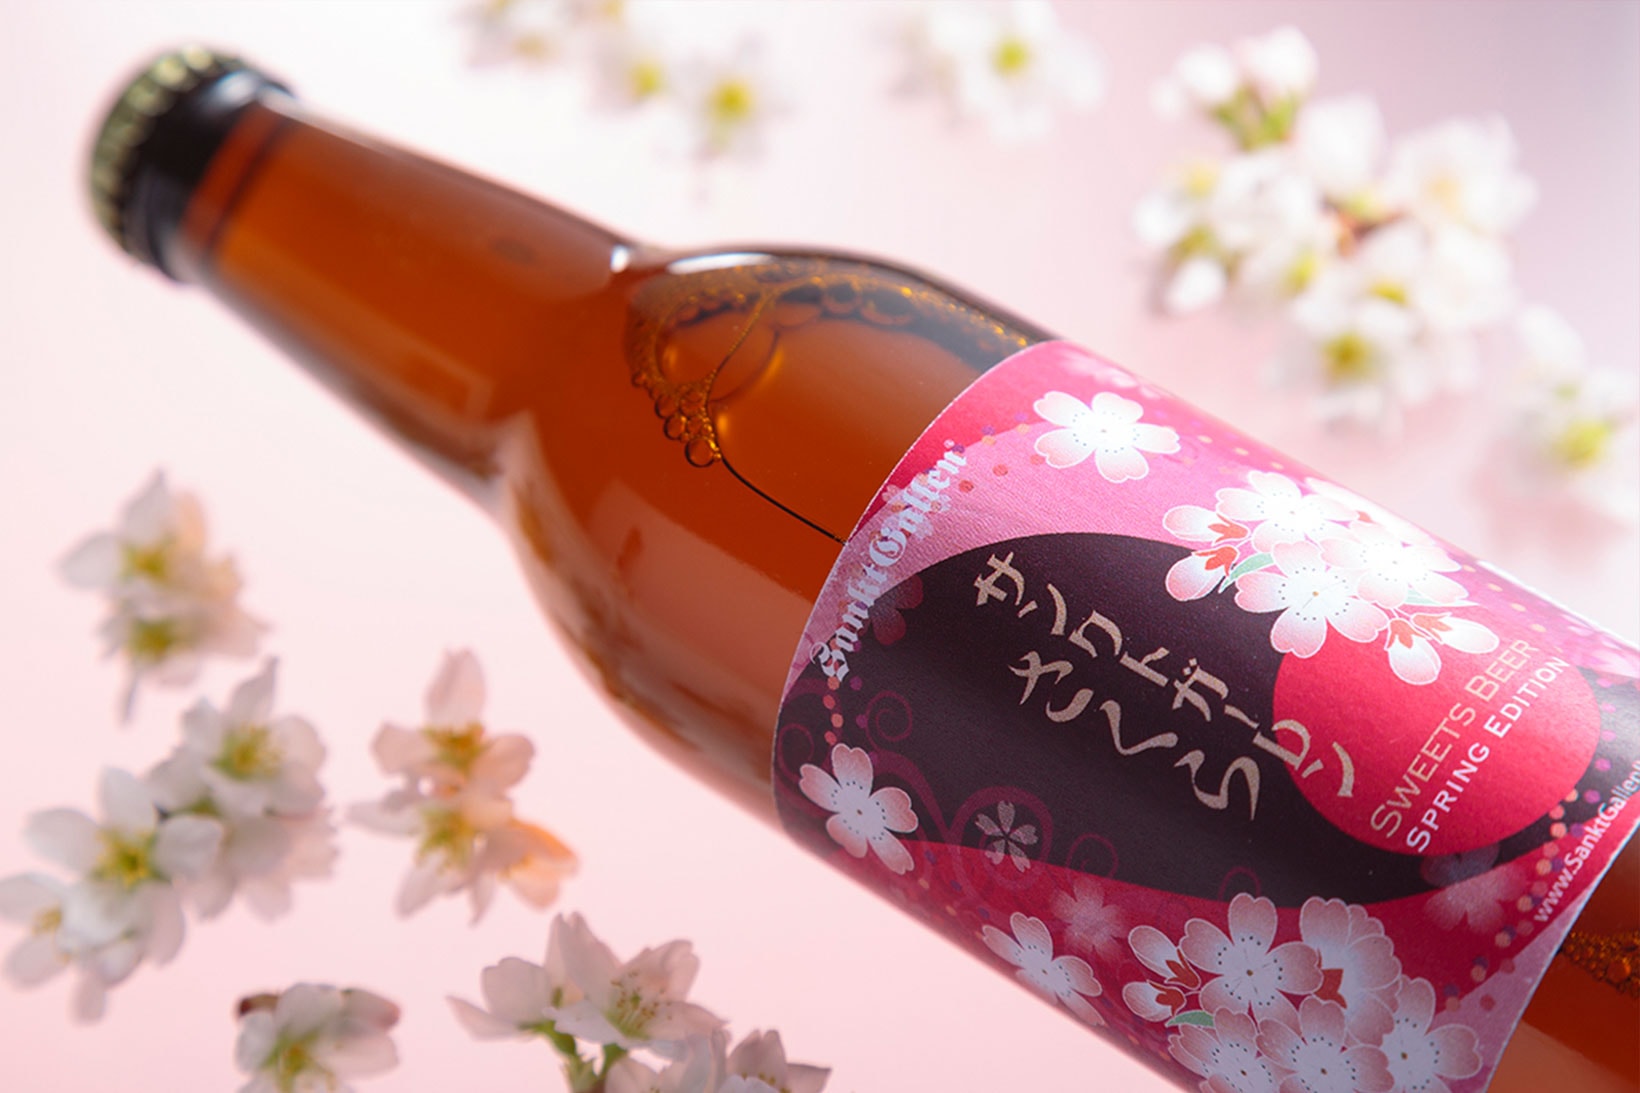 cherry blossom beer alcohol drink japan sankt gallen flower petals packaging label